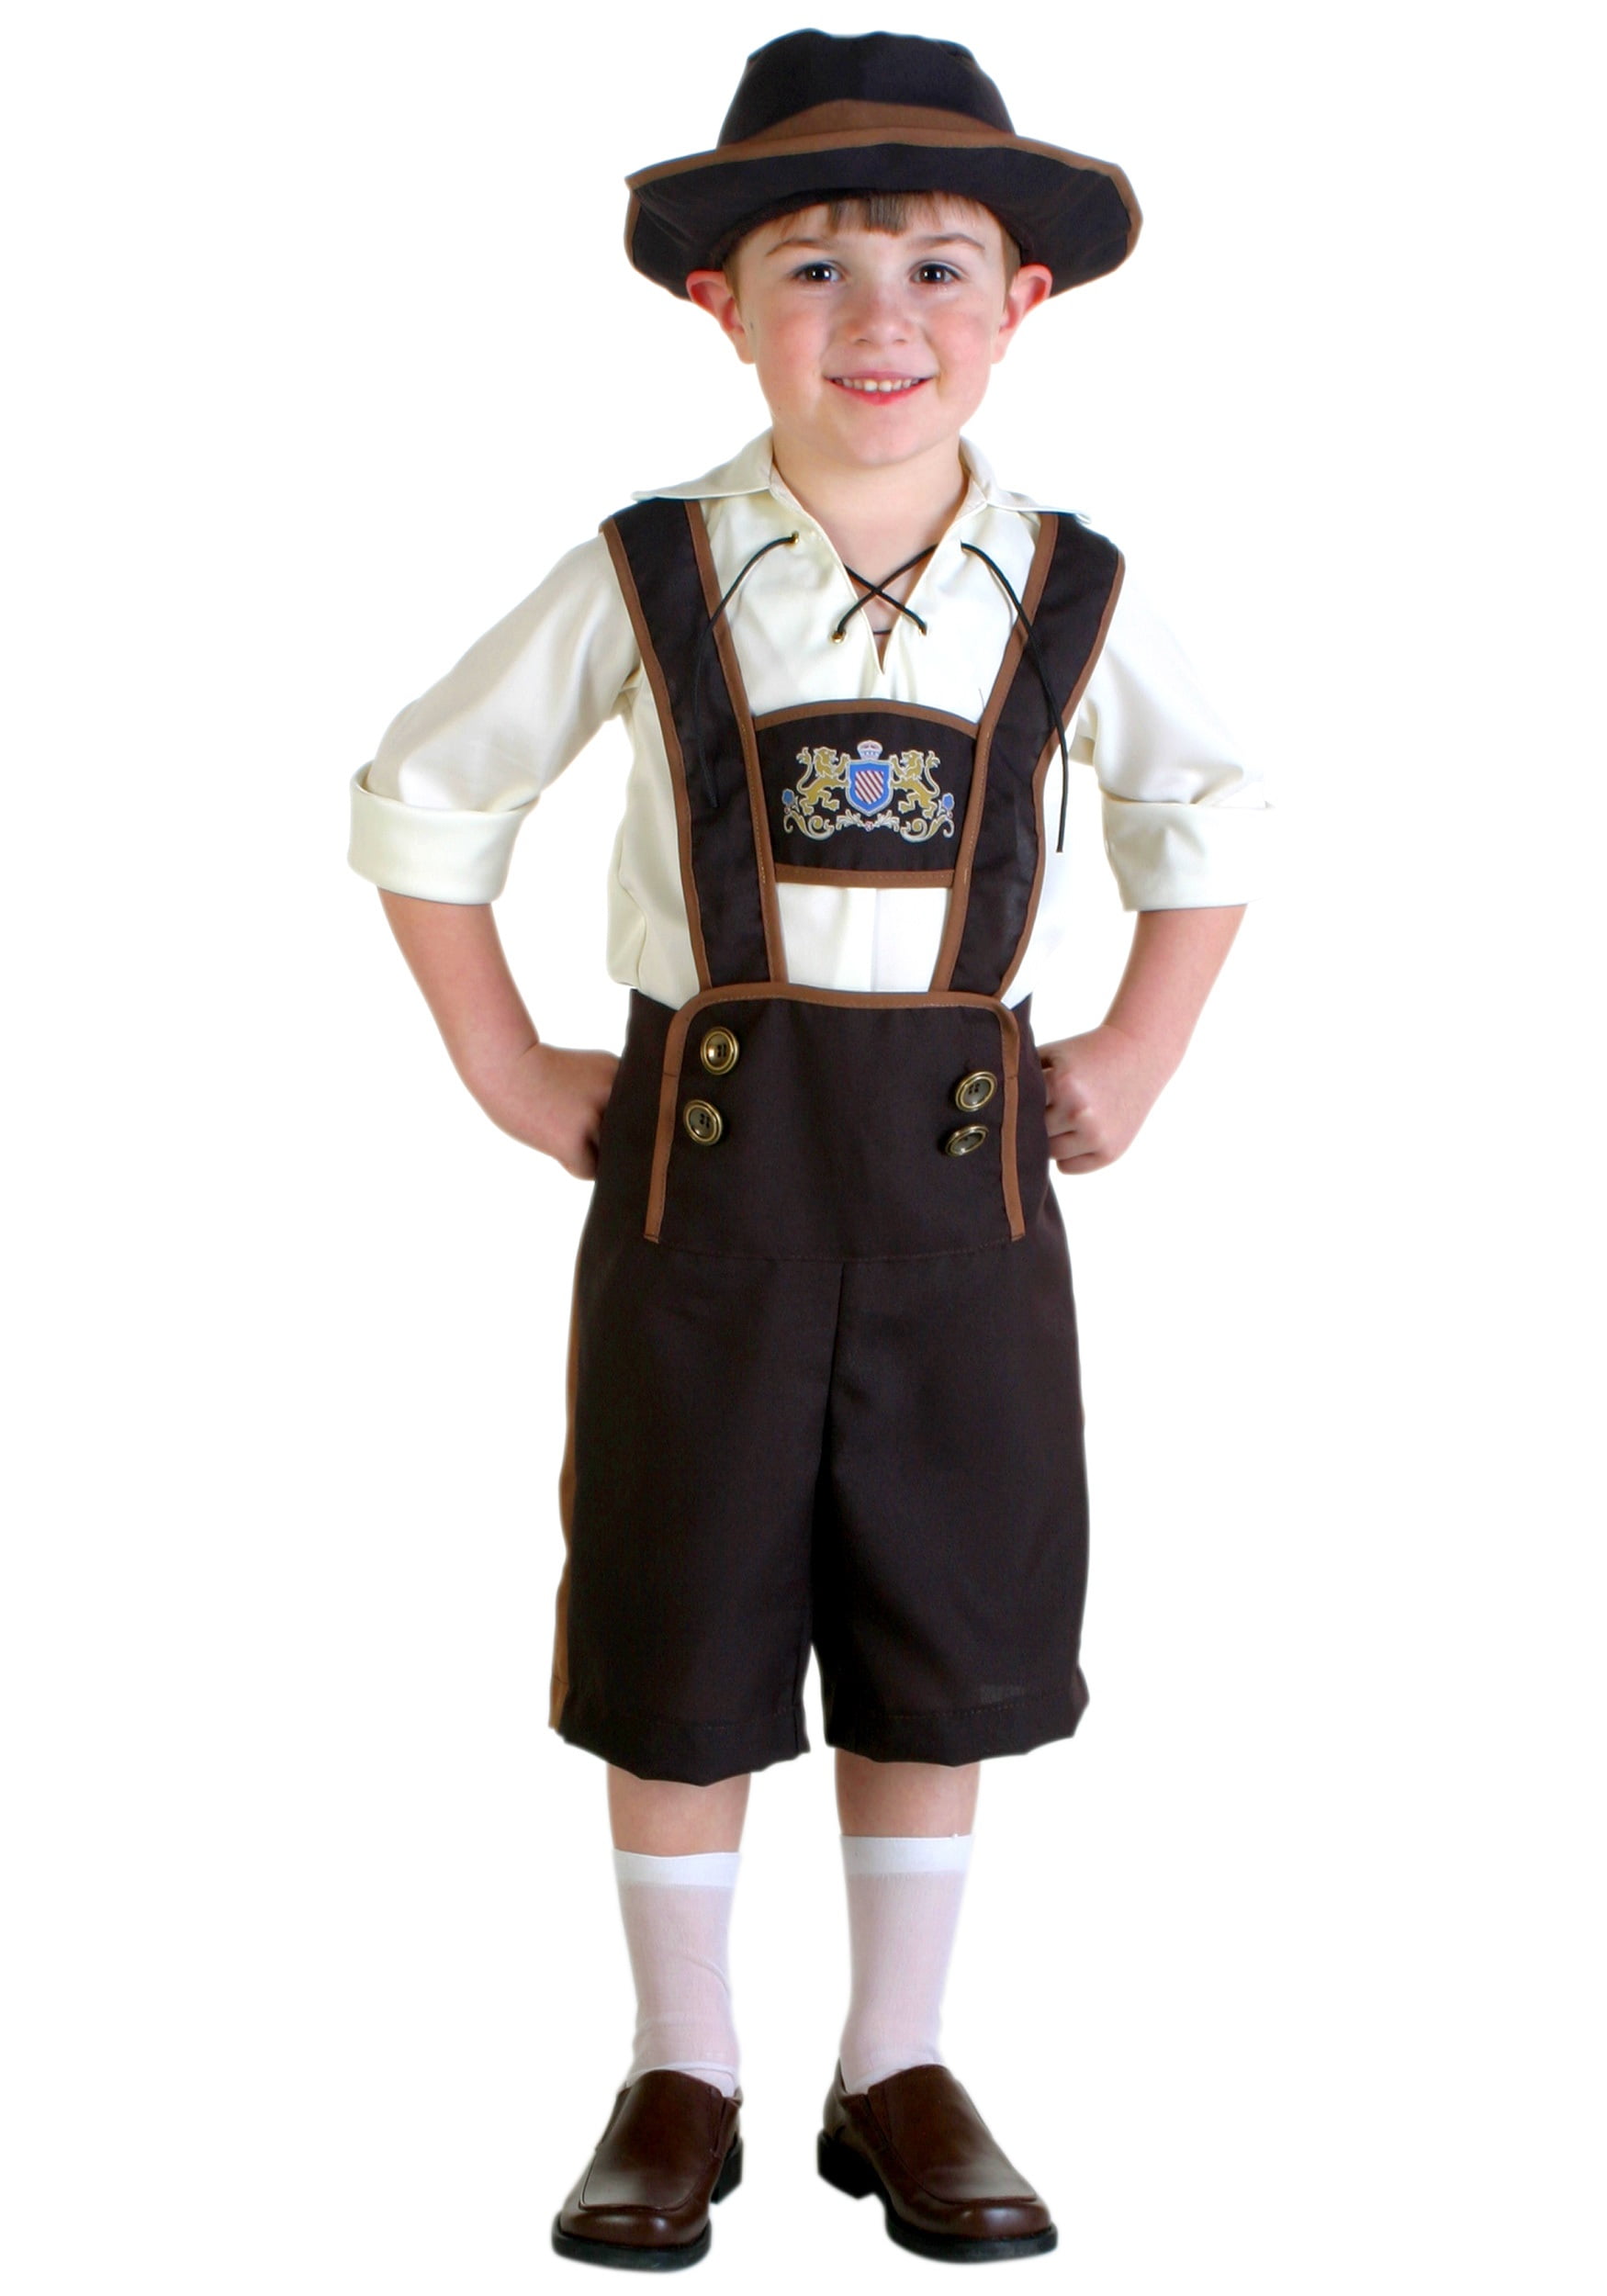 Toddler Lederhosen Boy Costume Walmart Com Walmart Com